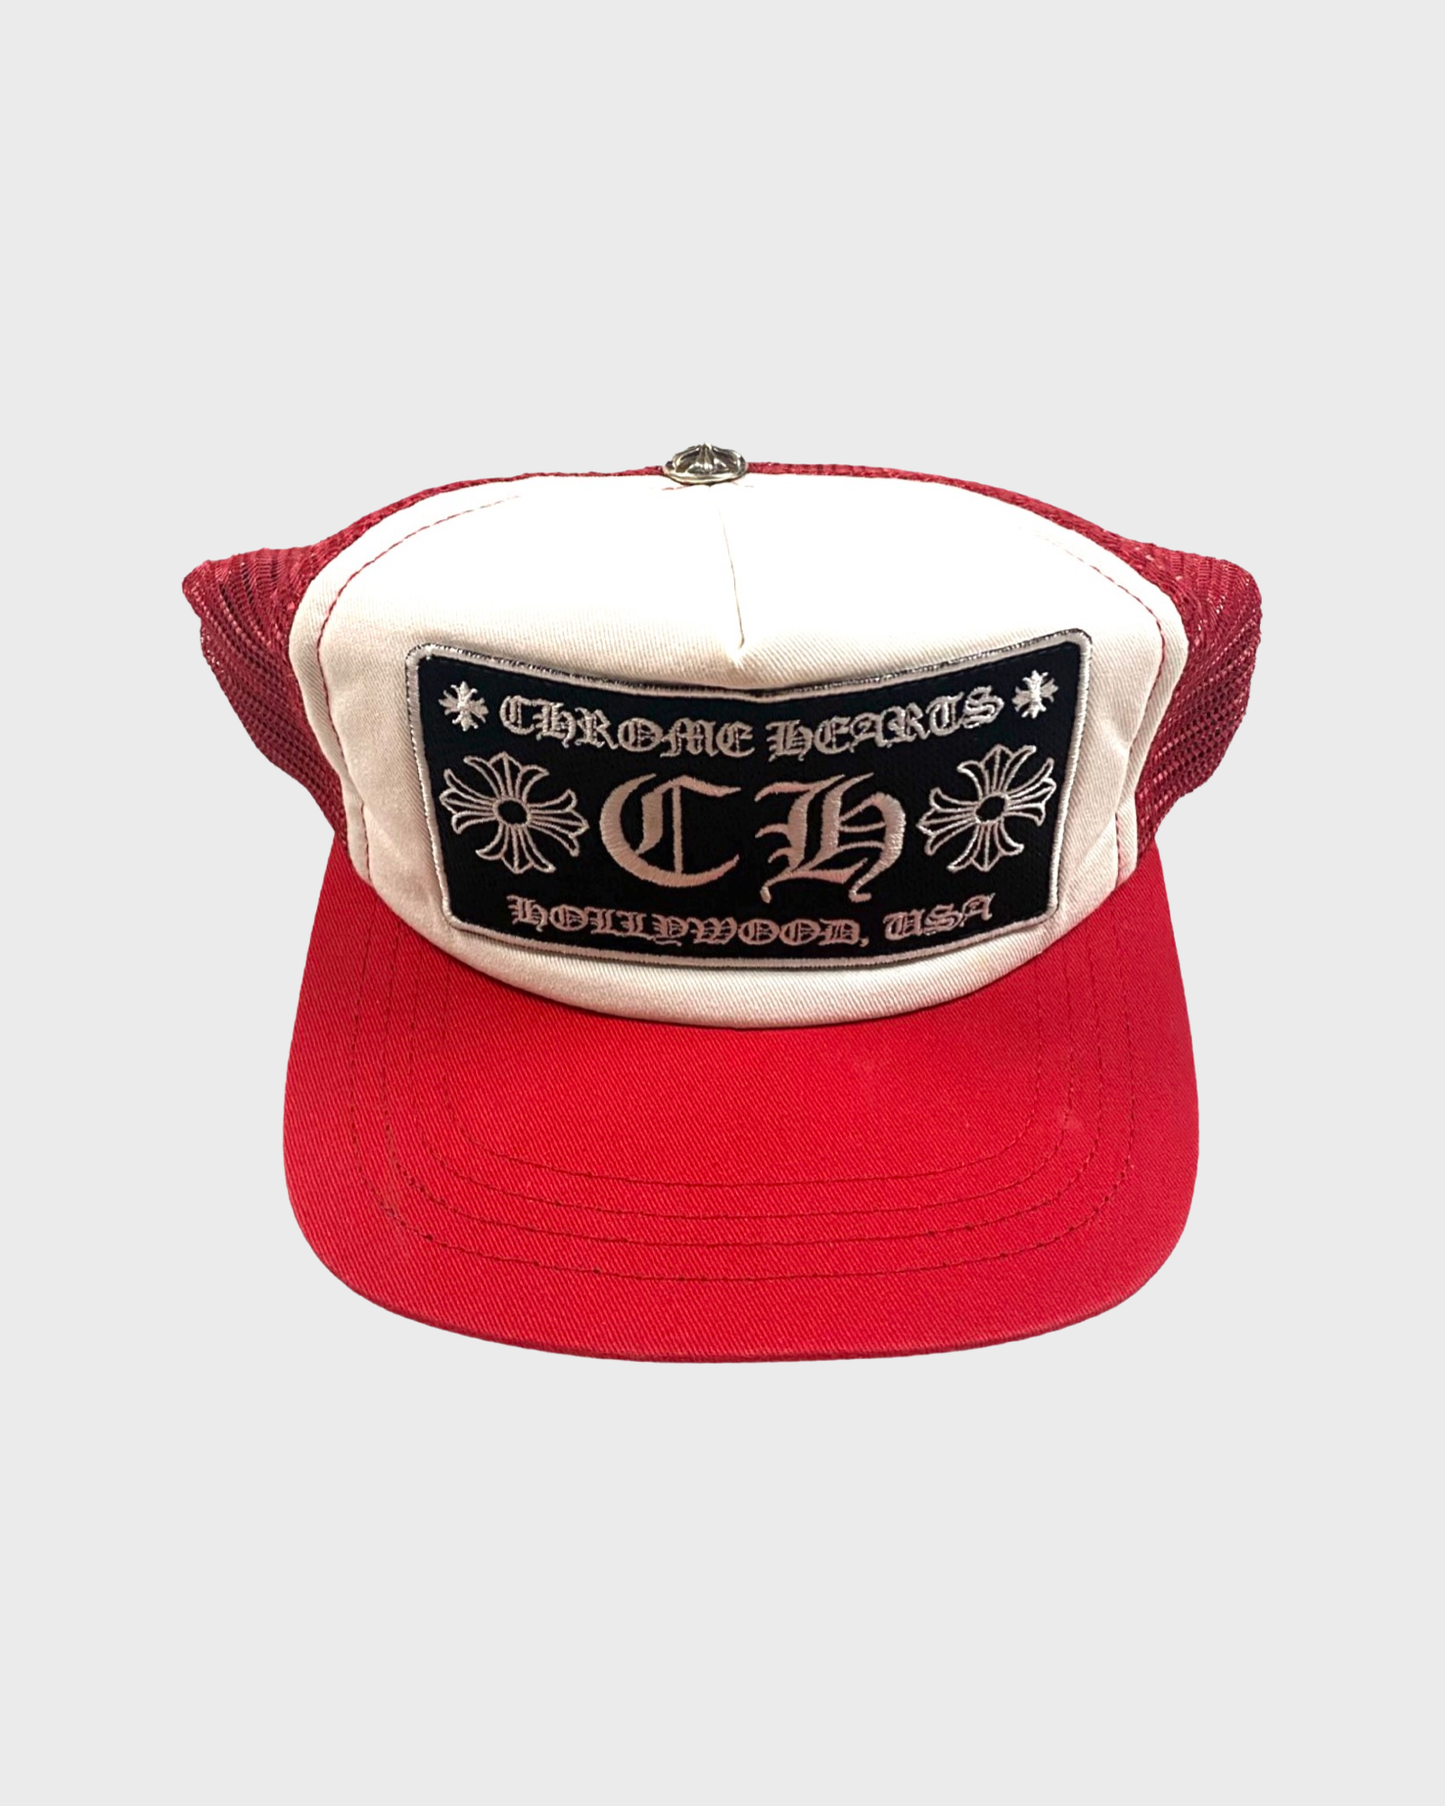 Chrome Hearts red & white trucker hat / cap SZ:OS